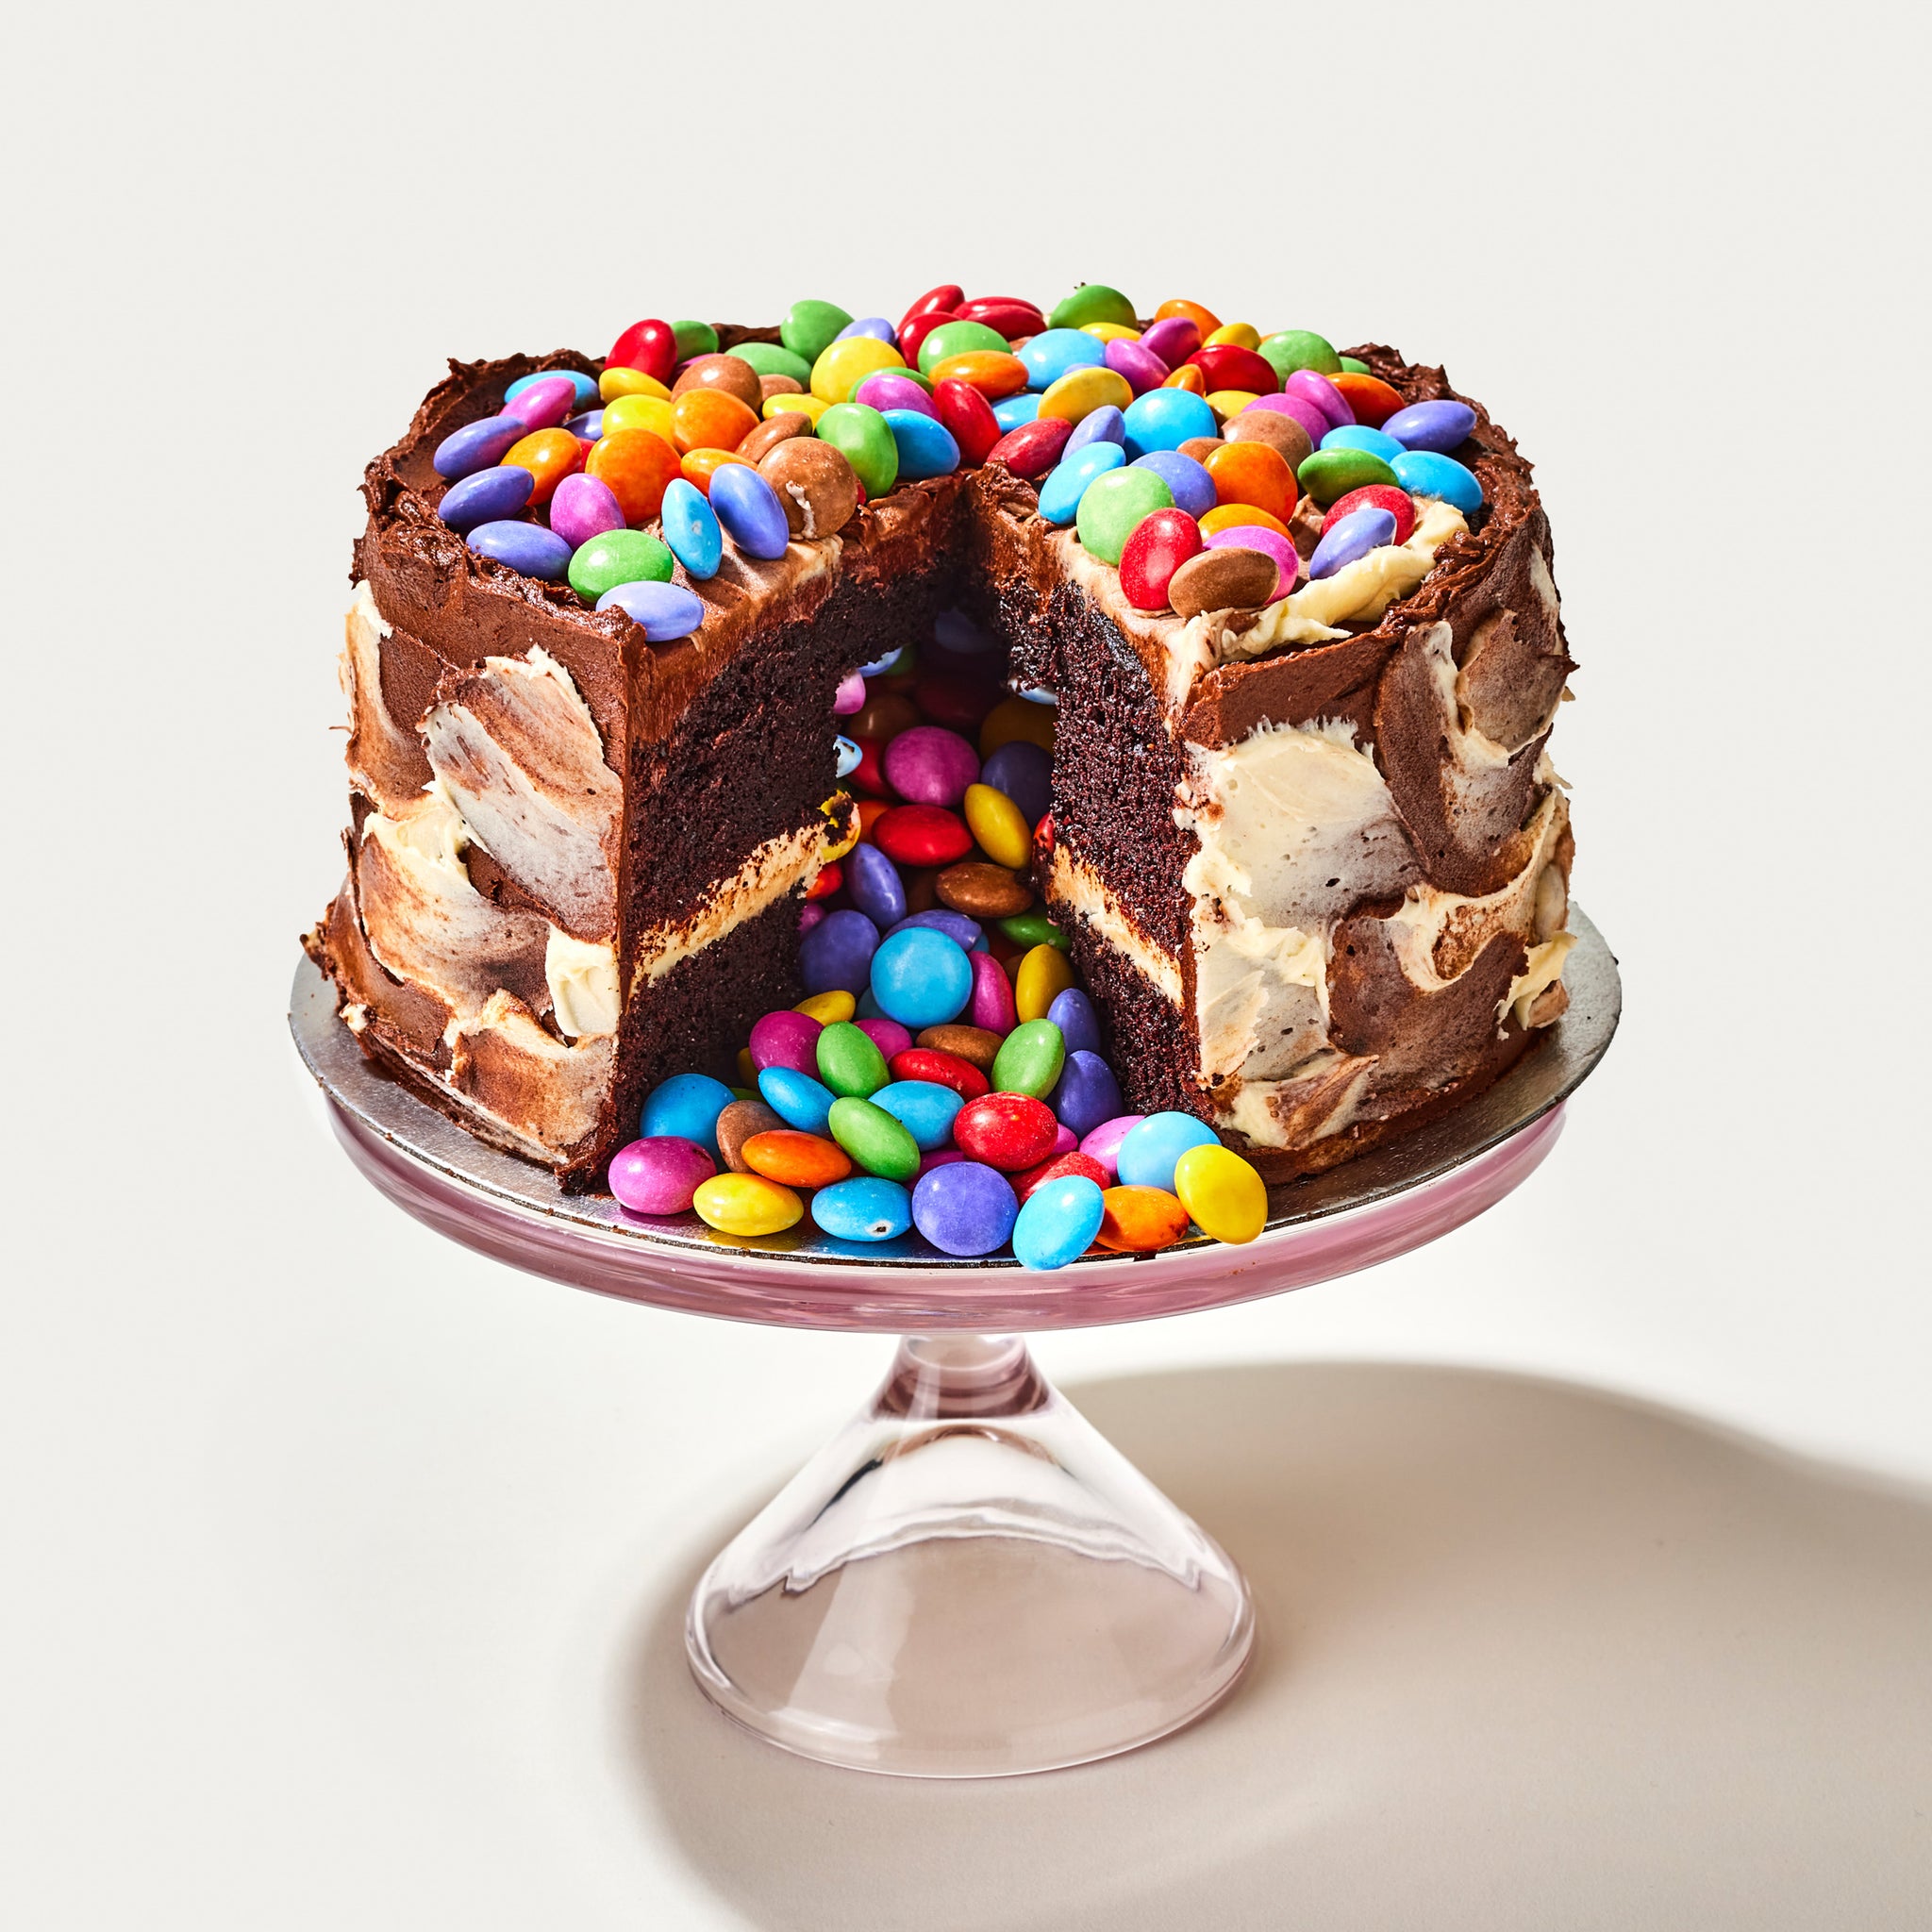 USA Pinata Cake - Striped Cake Design - coucoucake